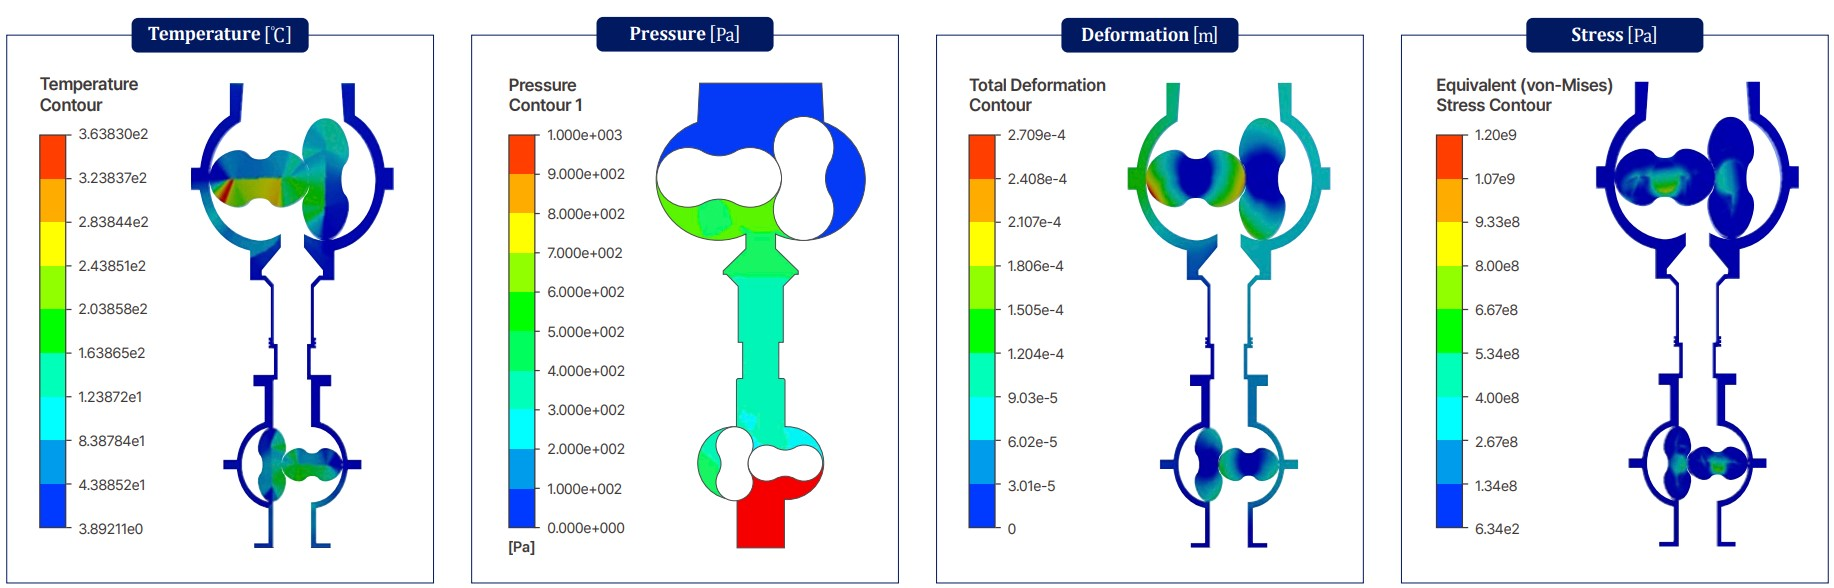 Temp., pressure, deformation and stress distributions of vacuum pumps at 0 deg.